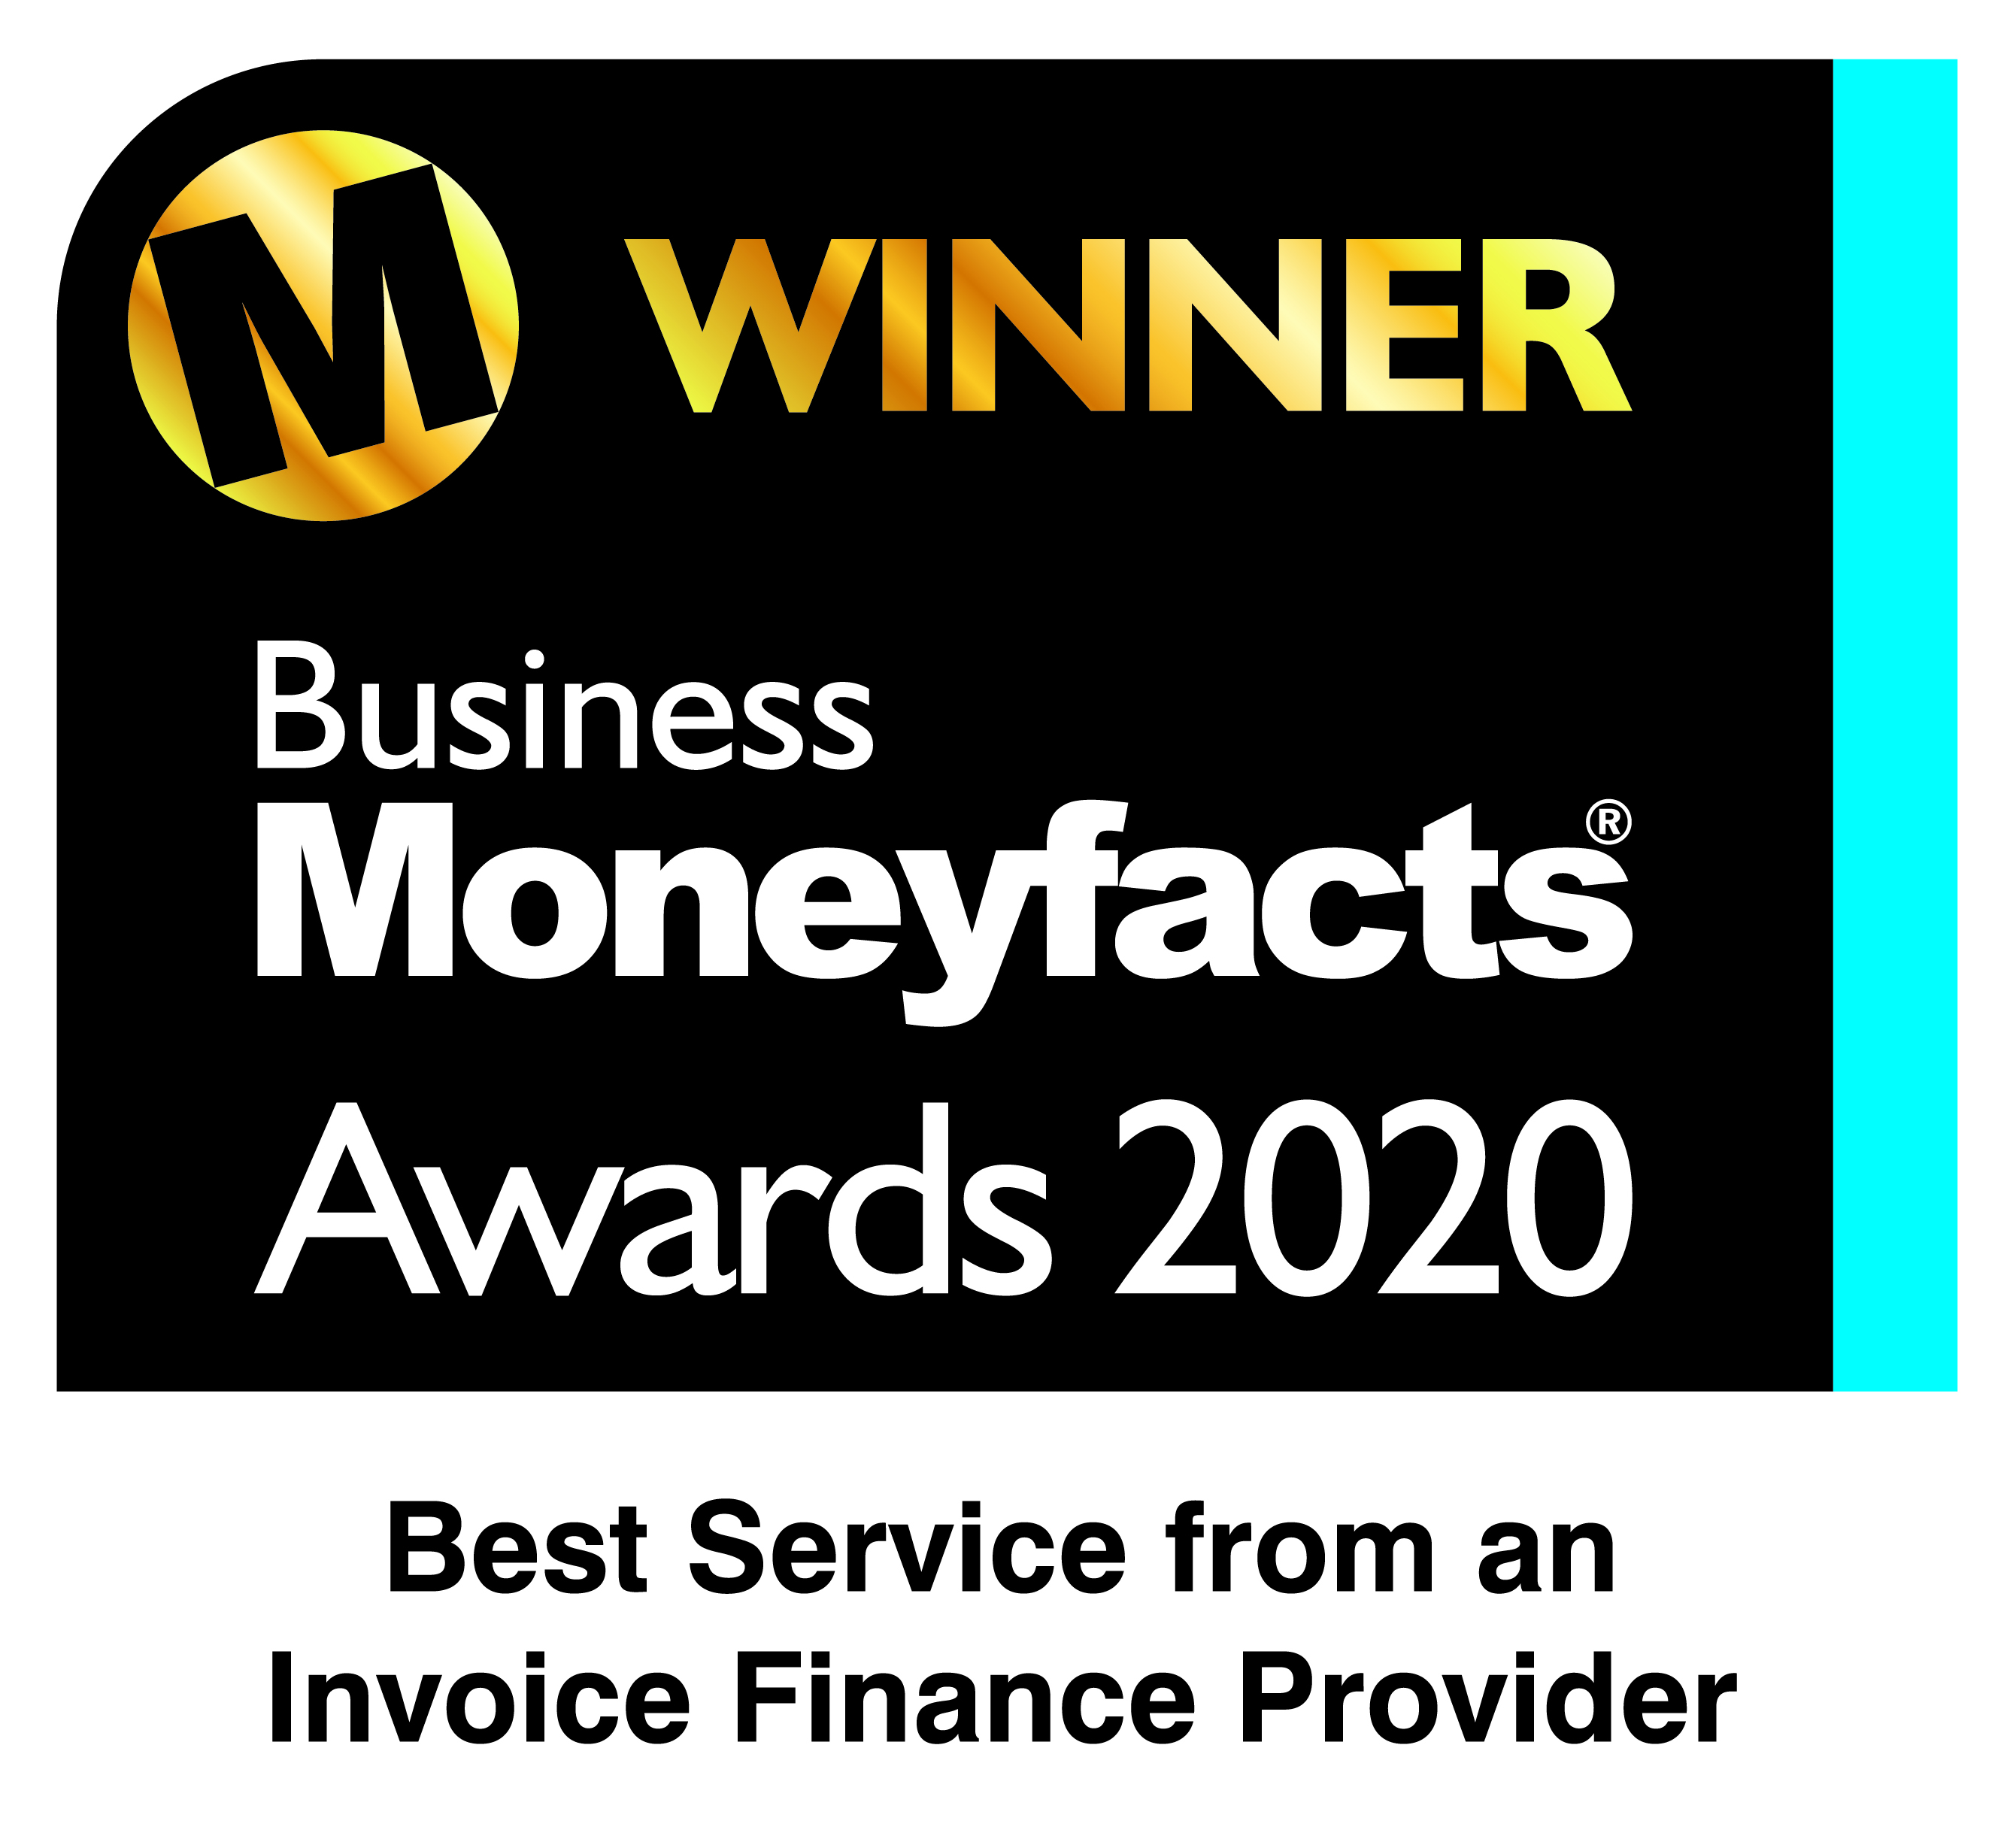 Business Moneyfacts Awards 2020